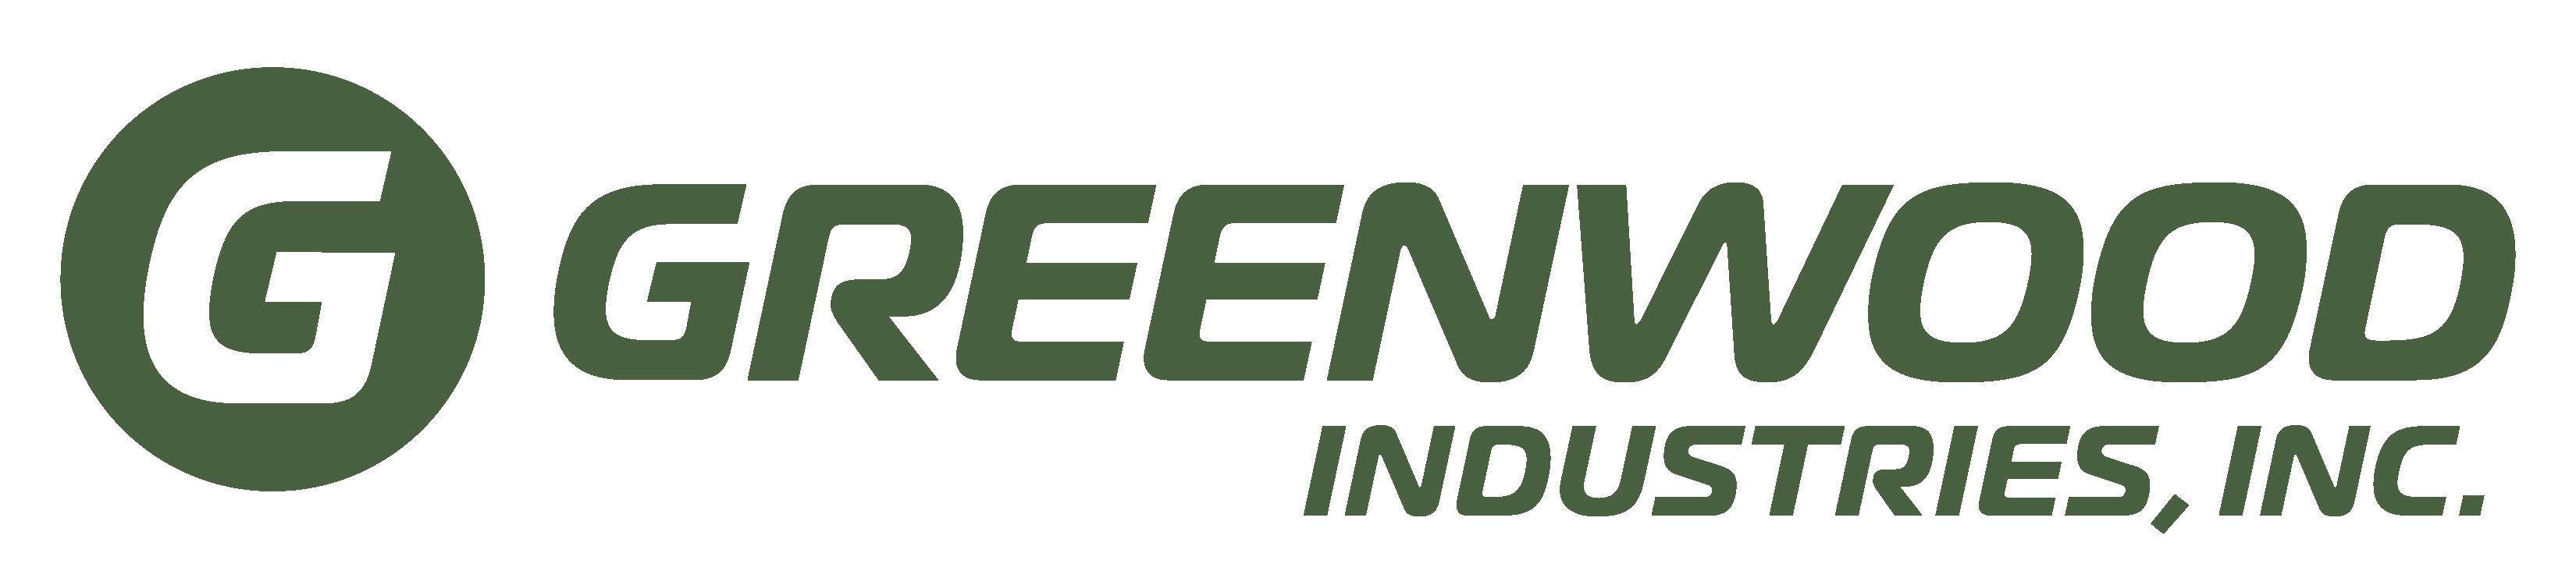 Greenwood Industries - logo